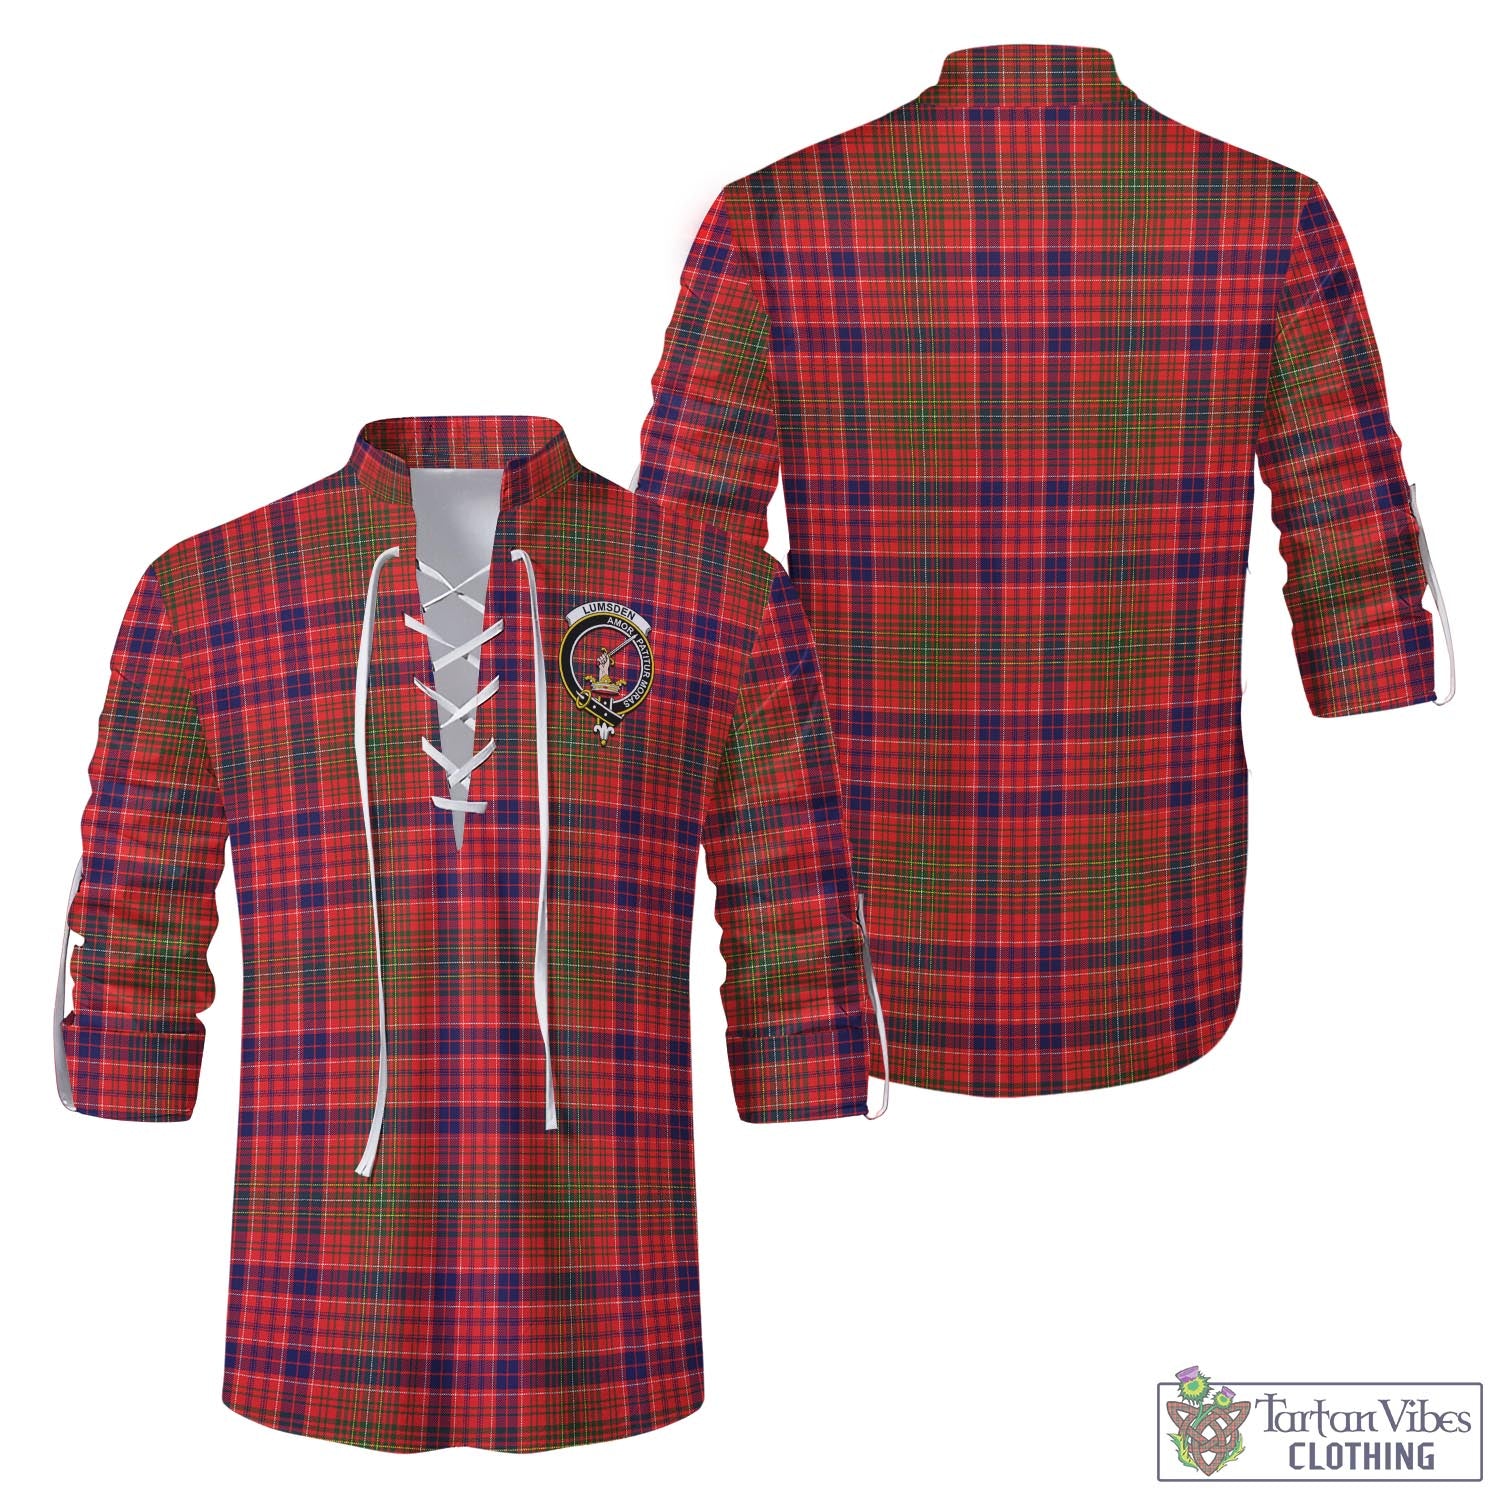 Tartan Vibes Clothing Lumsden Modern Tartan Men's Scottish Traditional Jacobite Ghillie Kilt Shirt with Family Crest